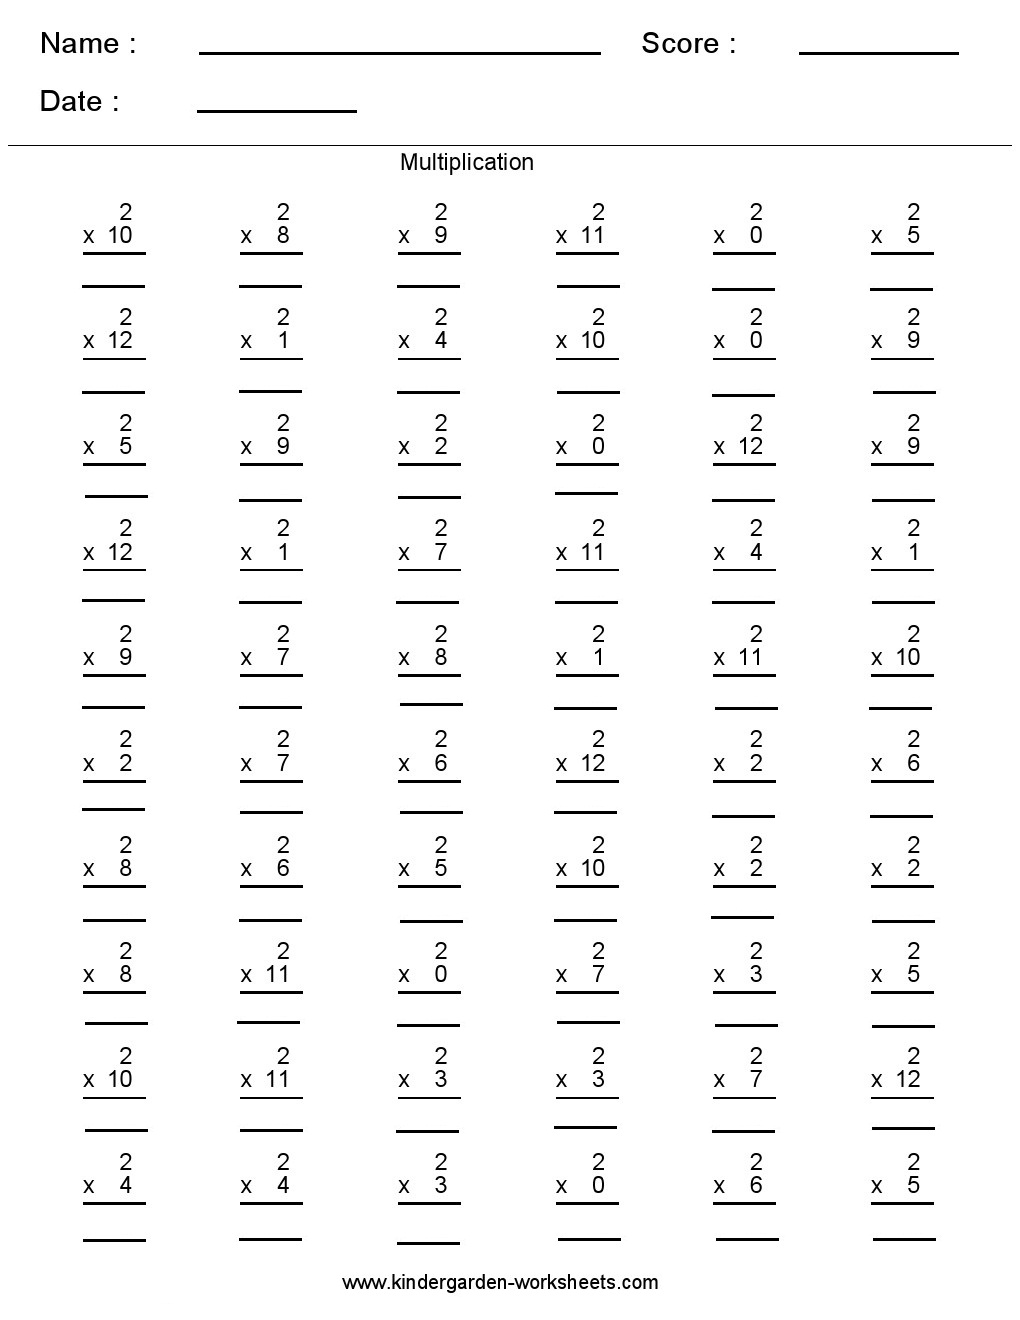 15-best-images-of-5th-grade-multiplication-worksheets-5th-grade-math